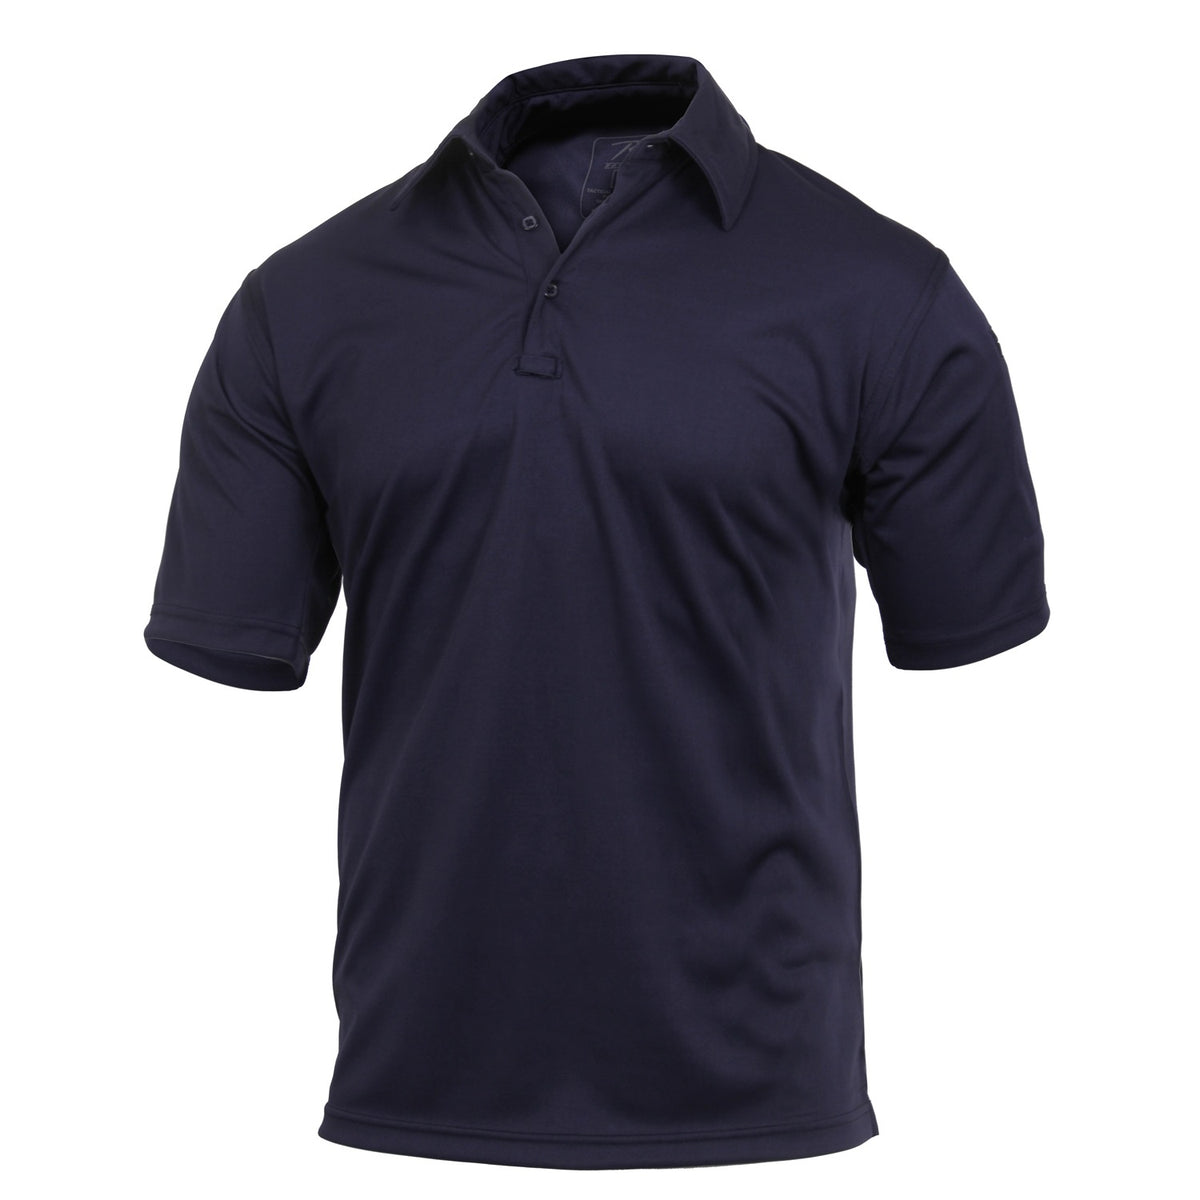 Rothco Tactical Performance Polo Shirt Midnight Navy Blue